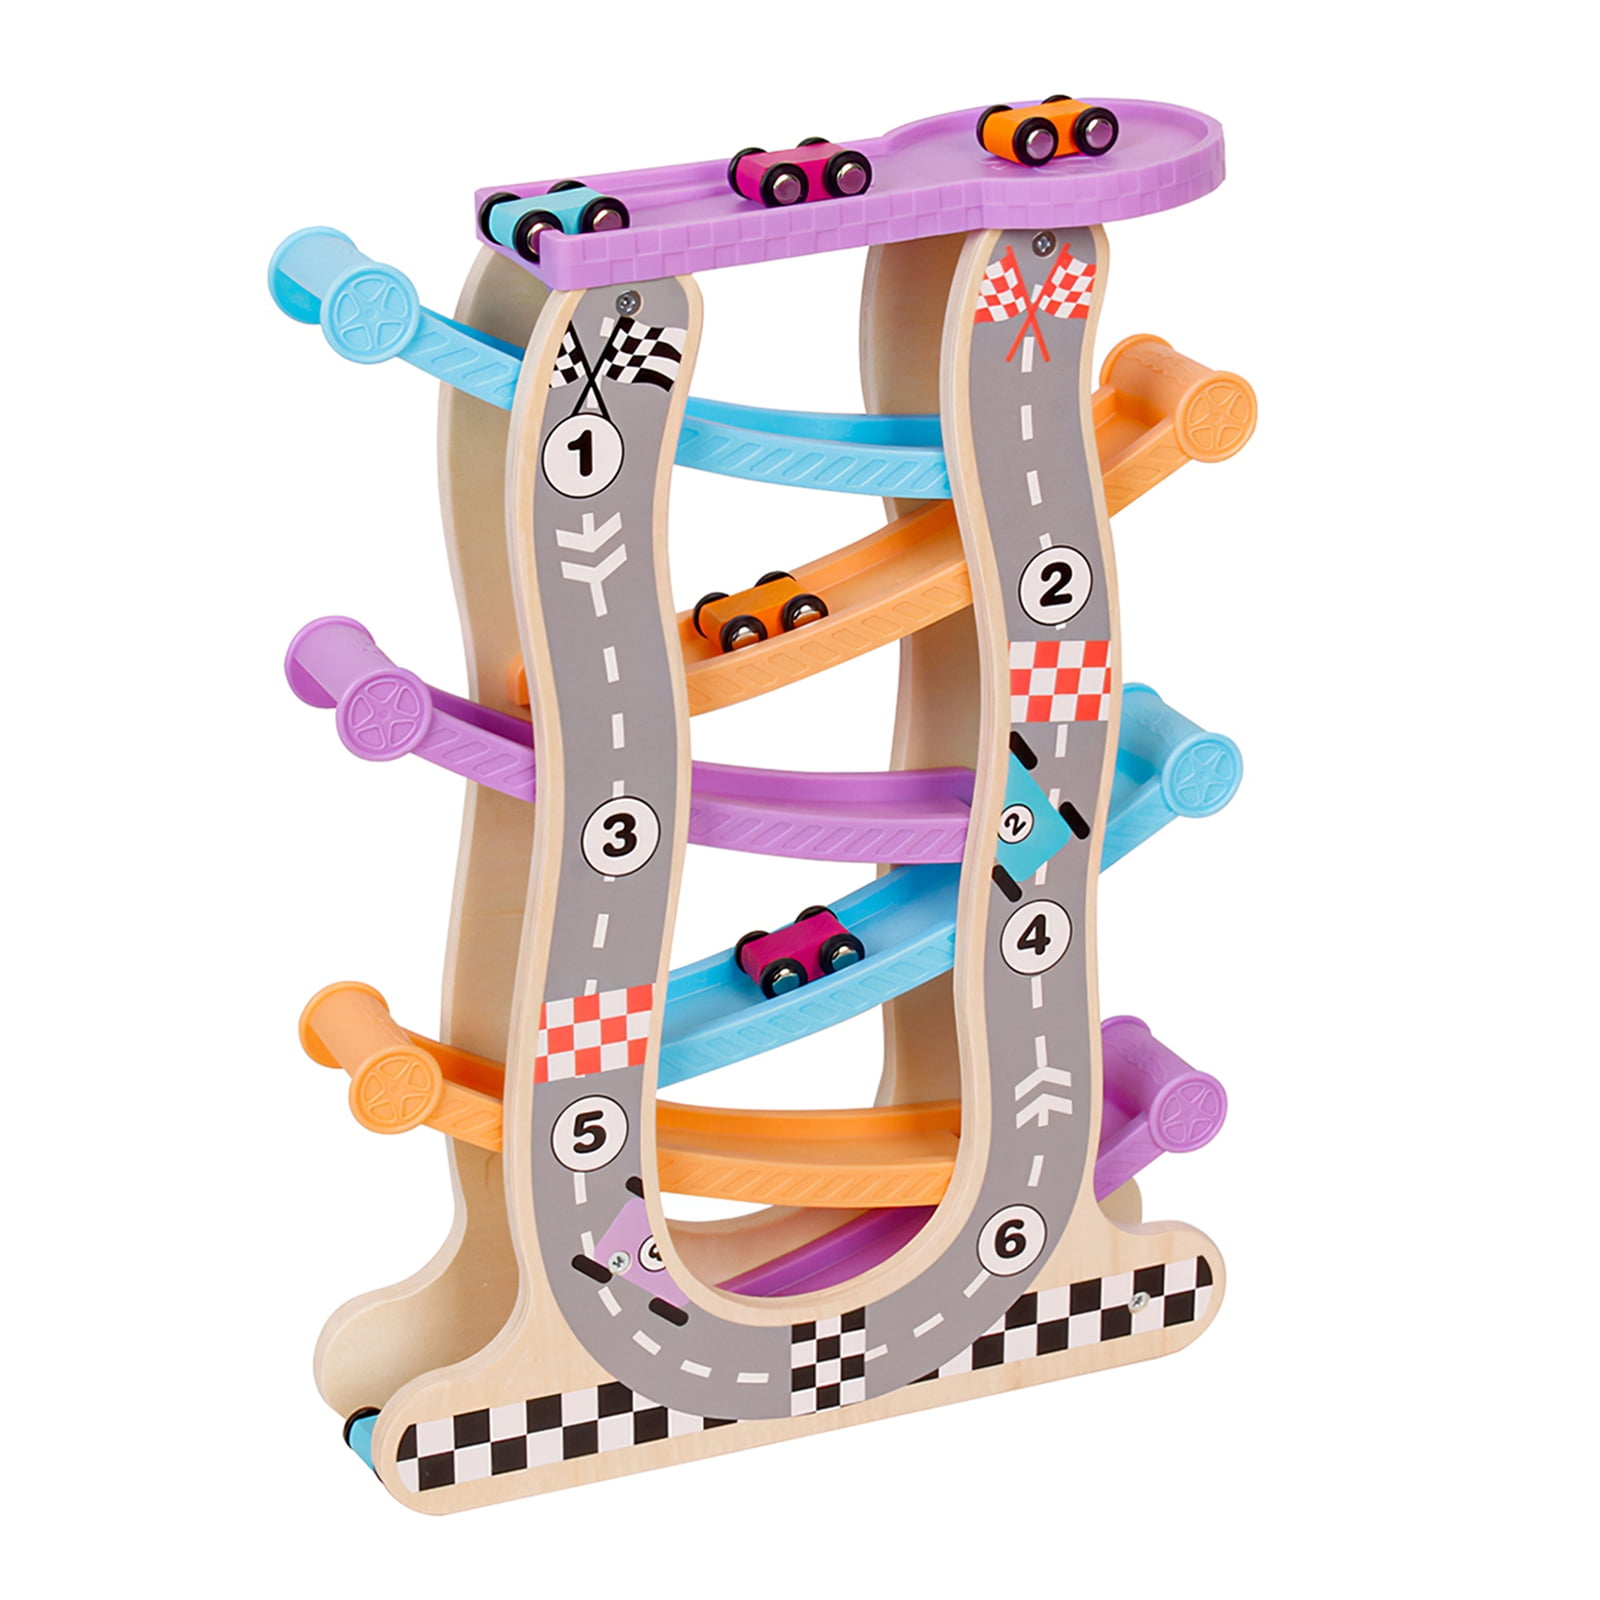 Wooden Ramp Race Track & Gliding Cars Kids Developmental Toy Vehicle Playset 